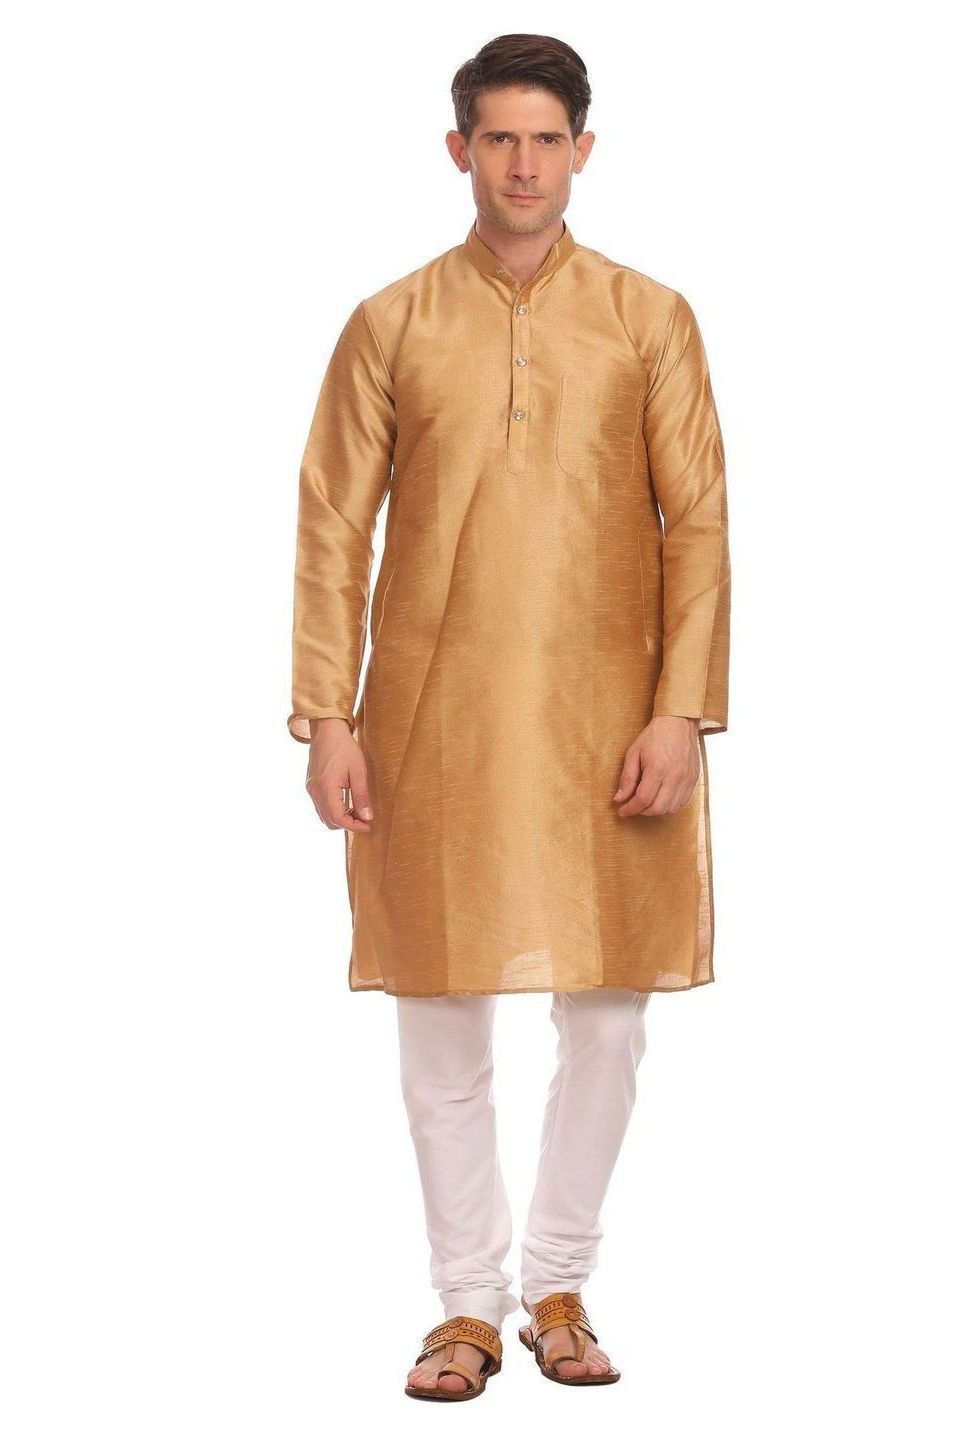 Banarasi Art Silk Gold Kurta Pyjama